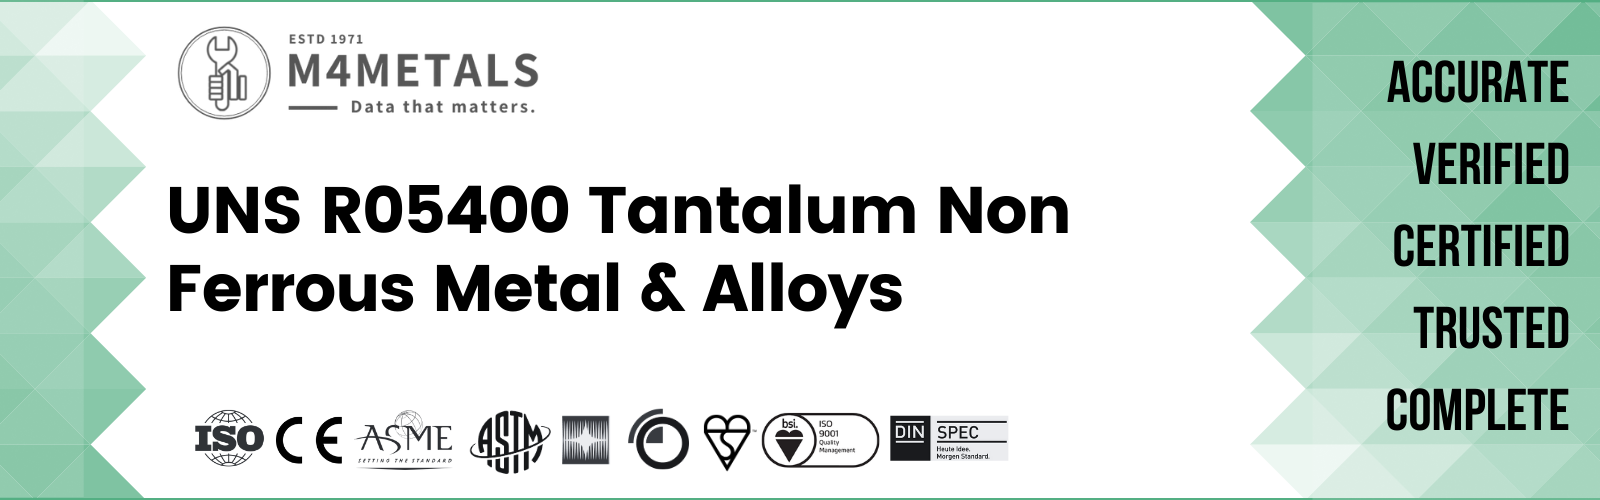 Tantalum UNS R05400